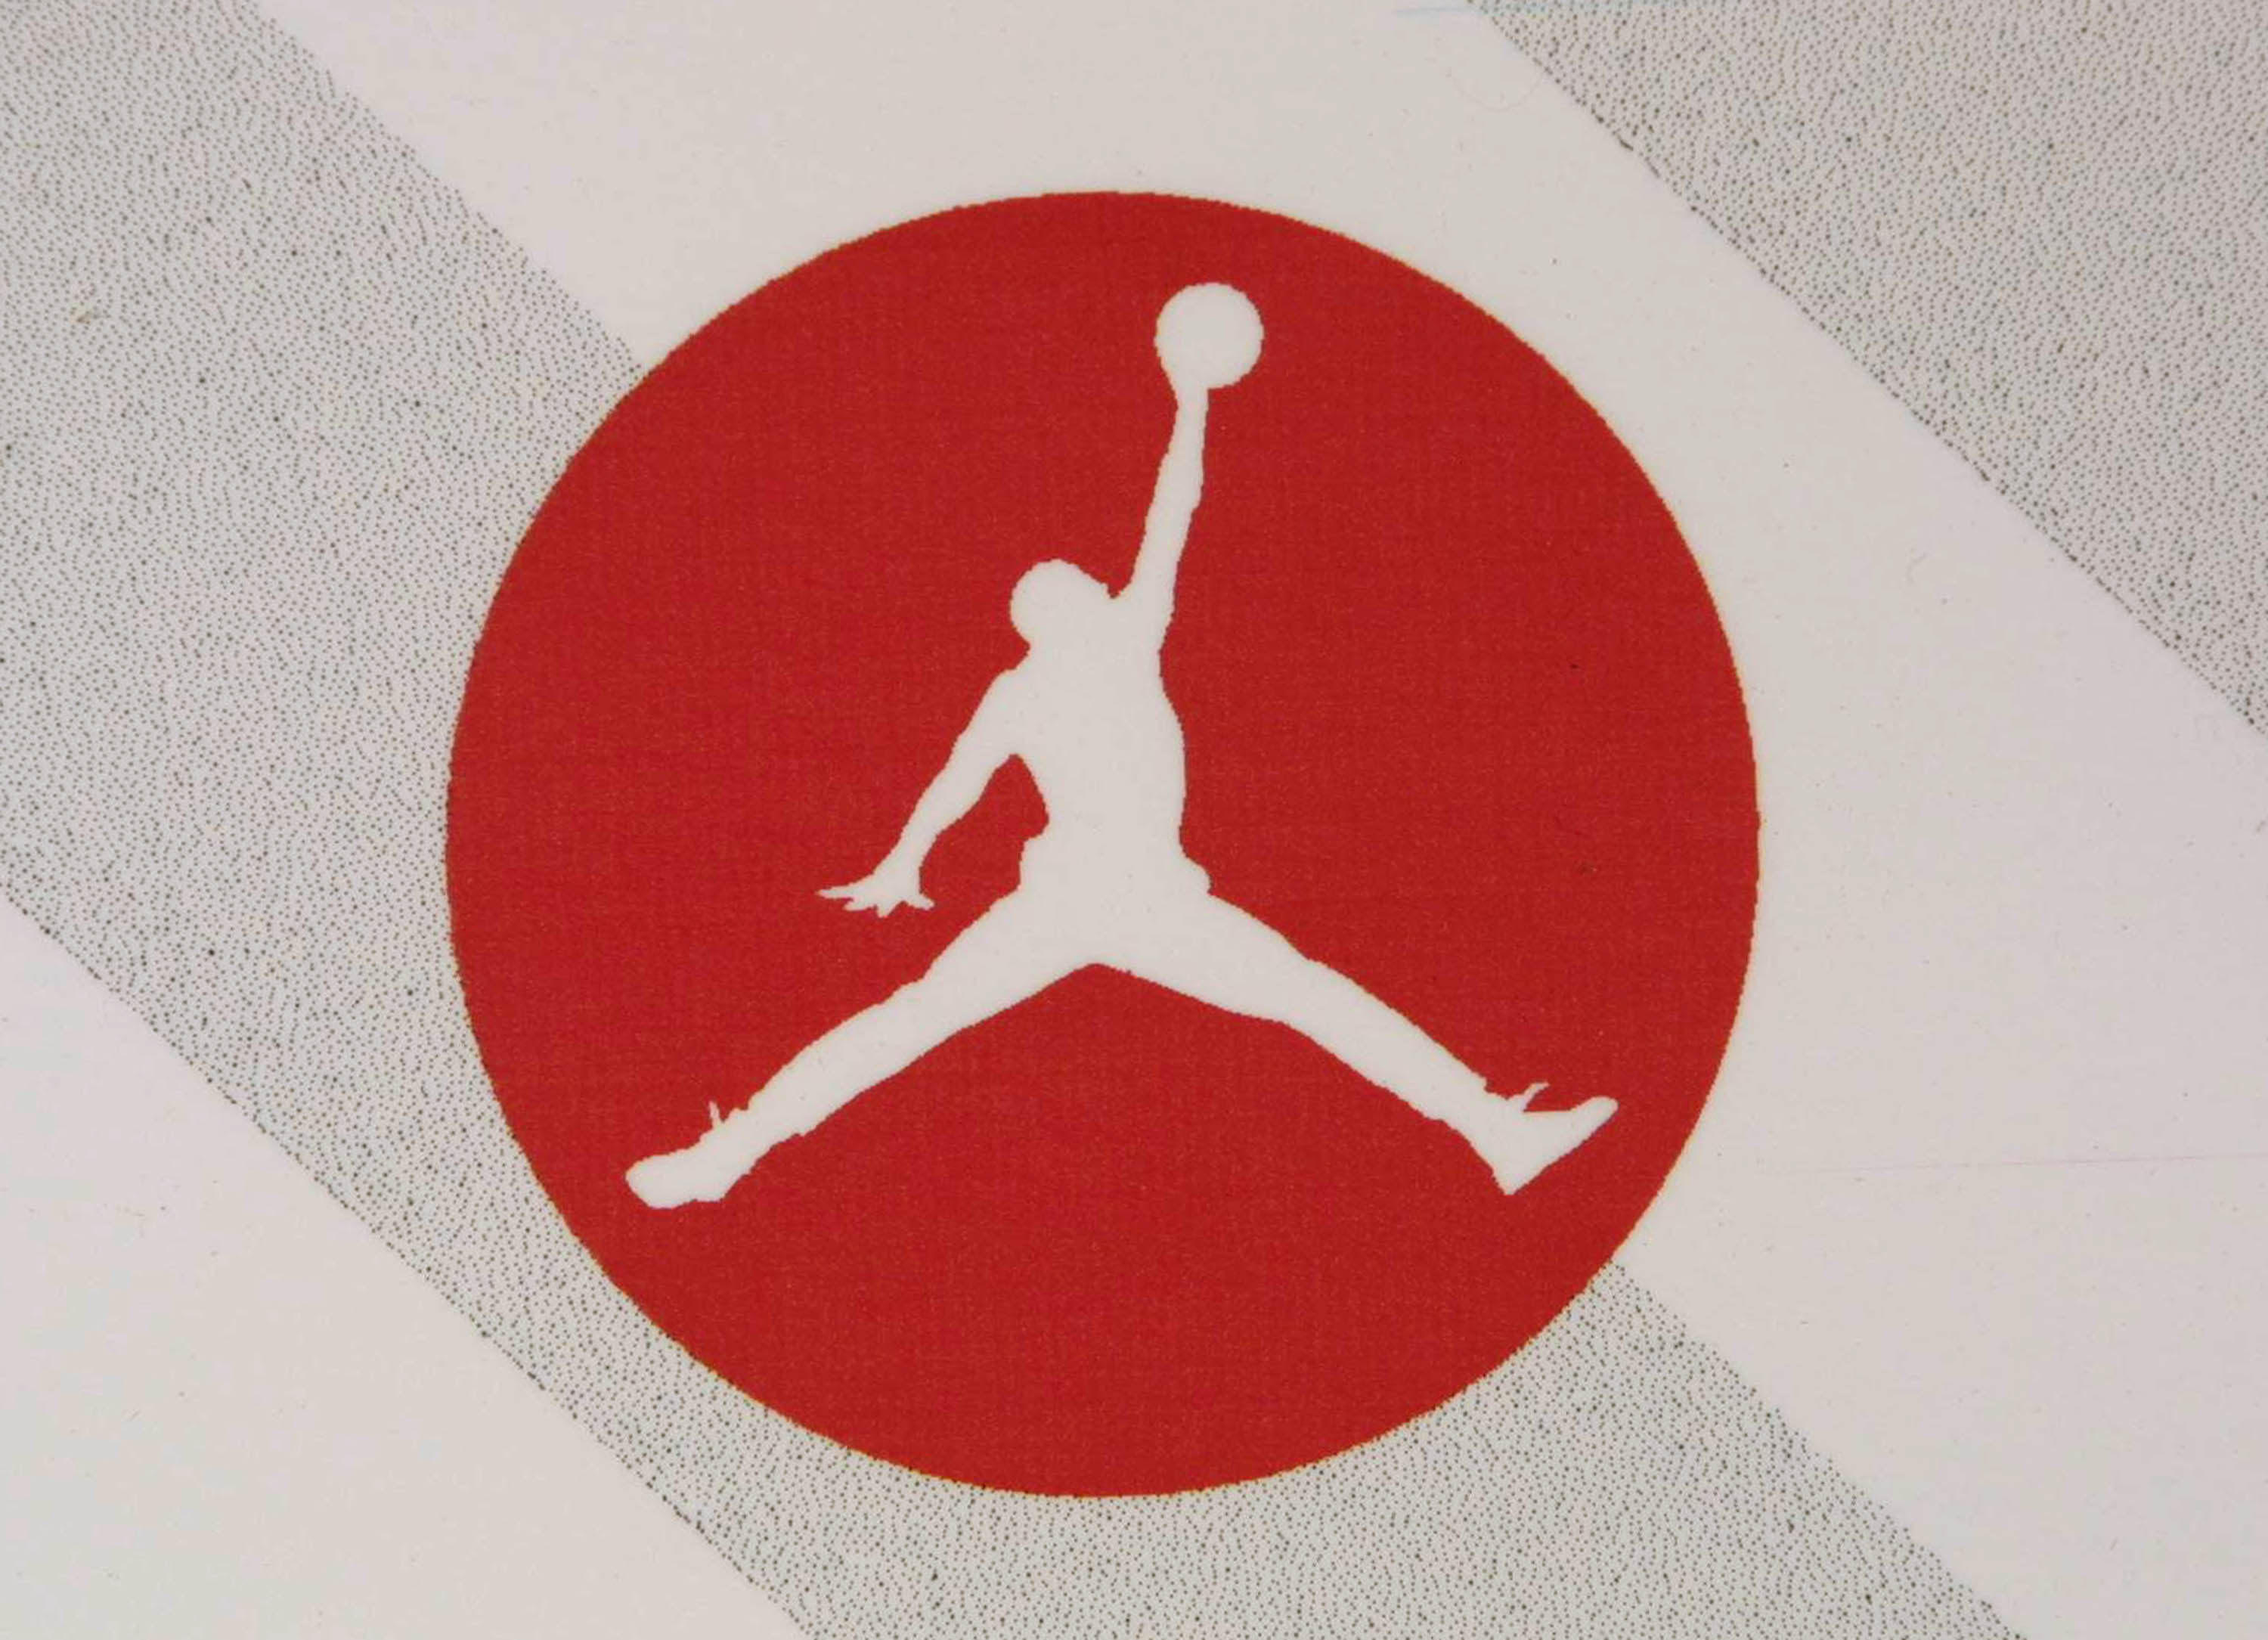 Nike SB x Air Jordan 4 “Sapphire Blue” Gets Sobering Update